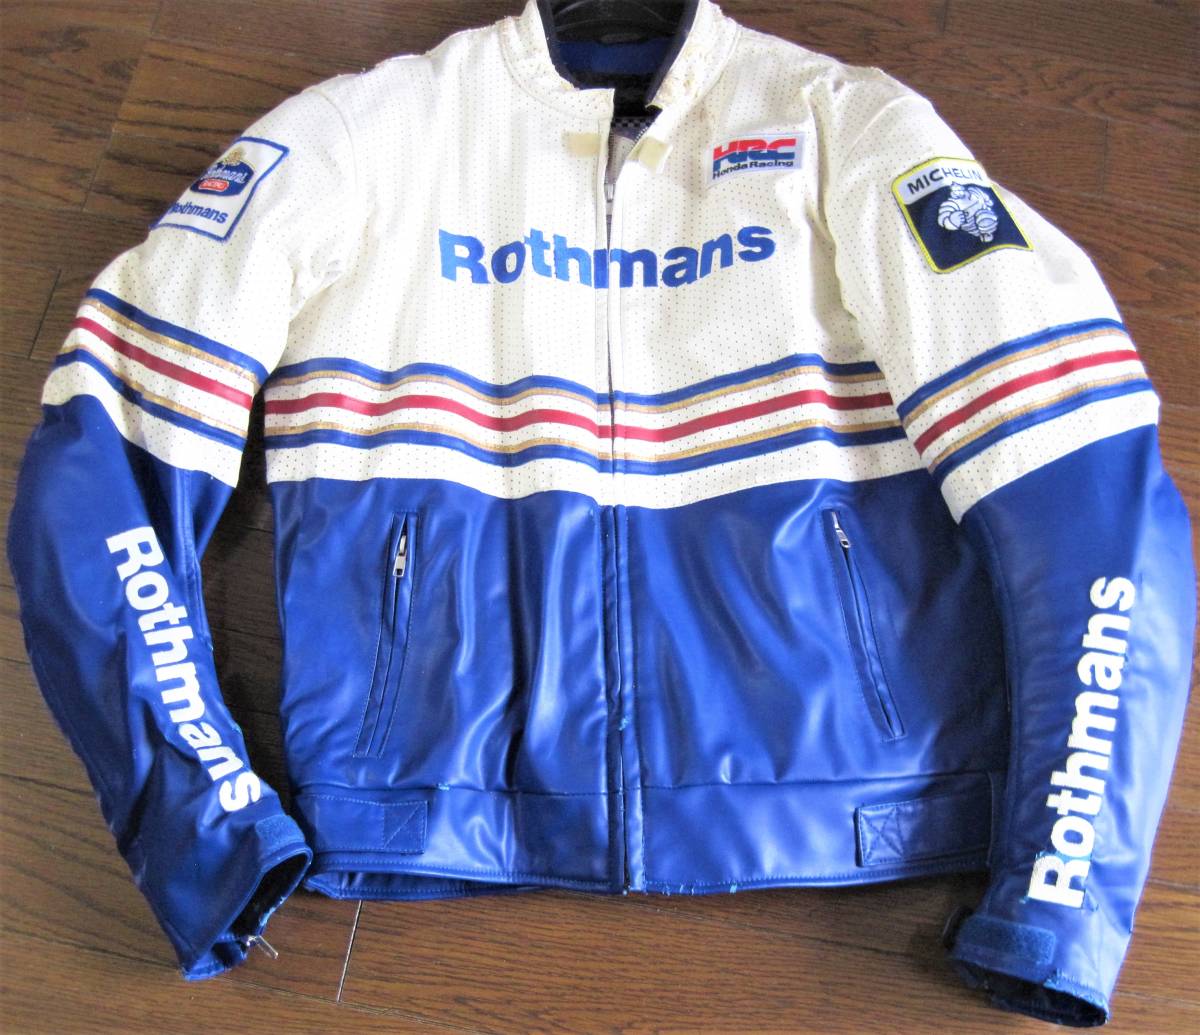 Rothmans HONDA ロスマンズホンダ レーシングジャケット ライダースジャケット 販売本物